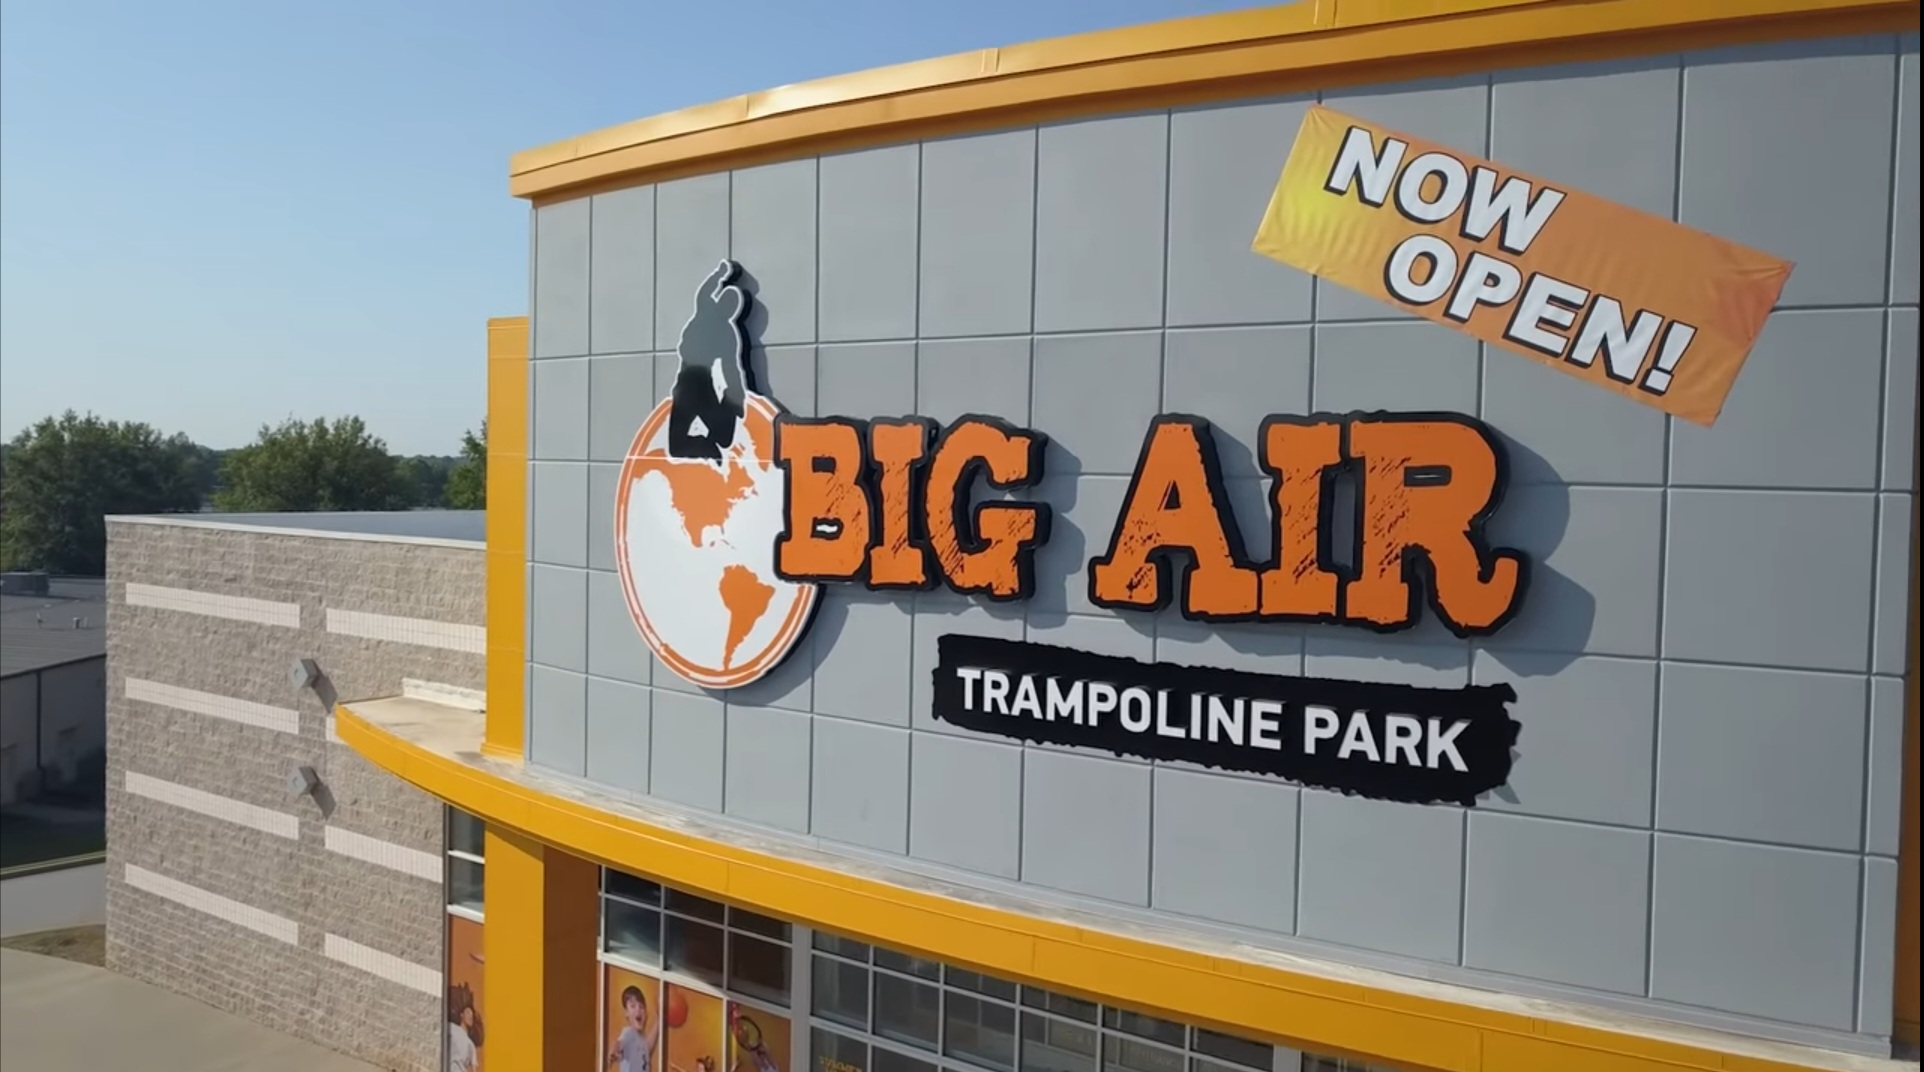 The Big Air Trampoline Park